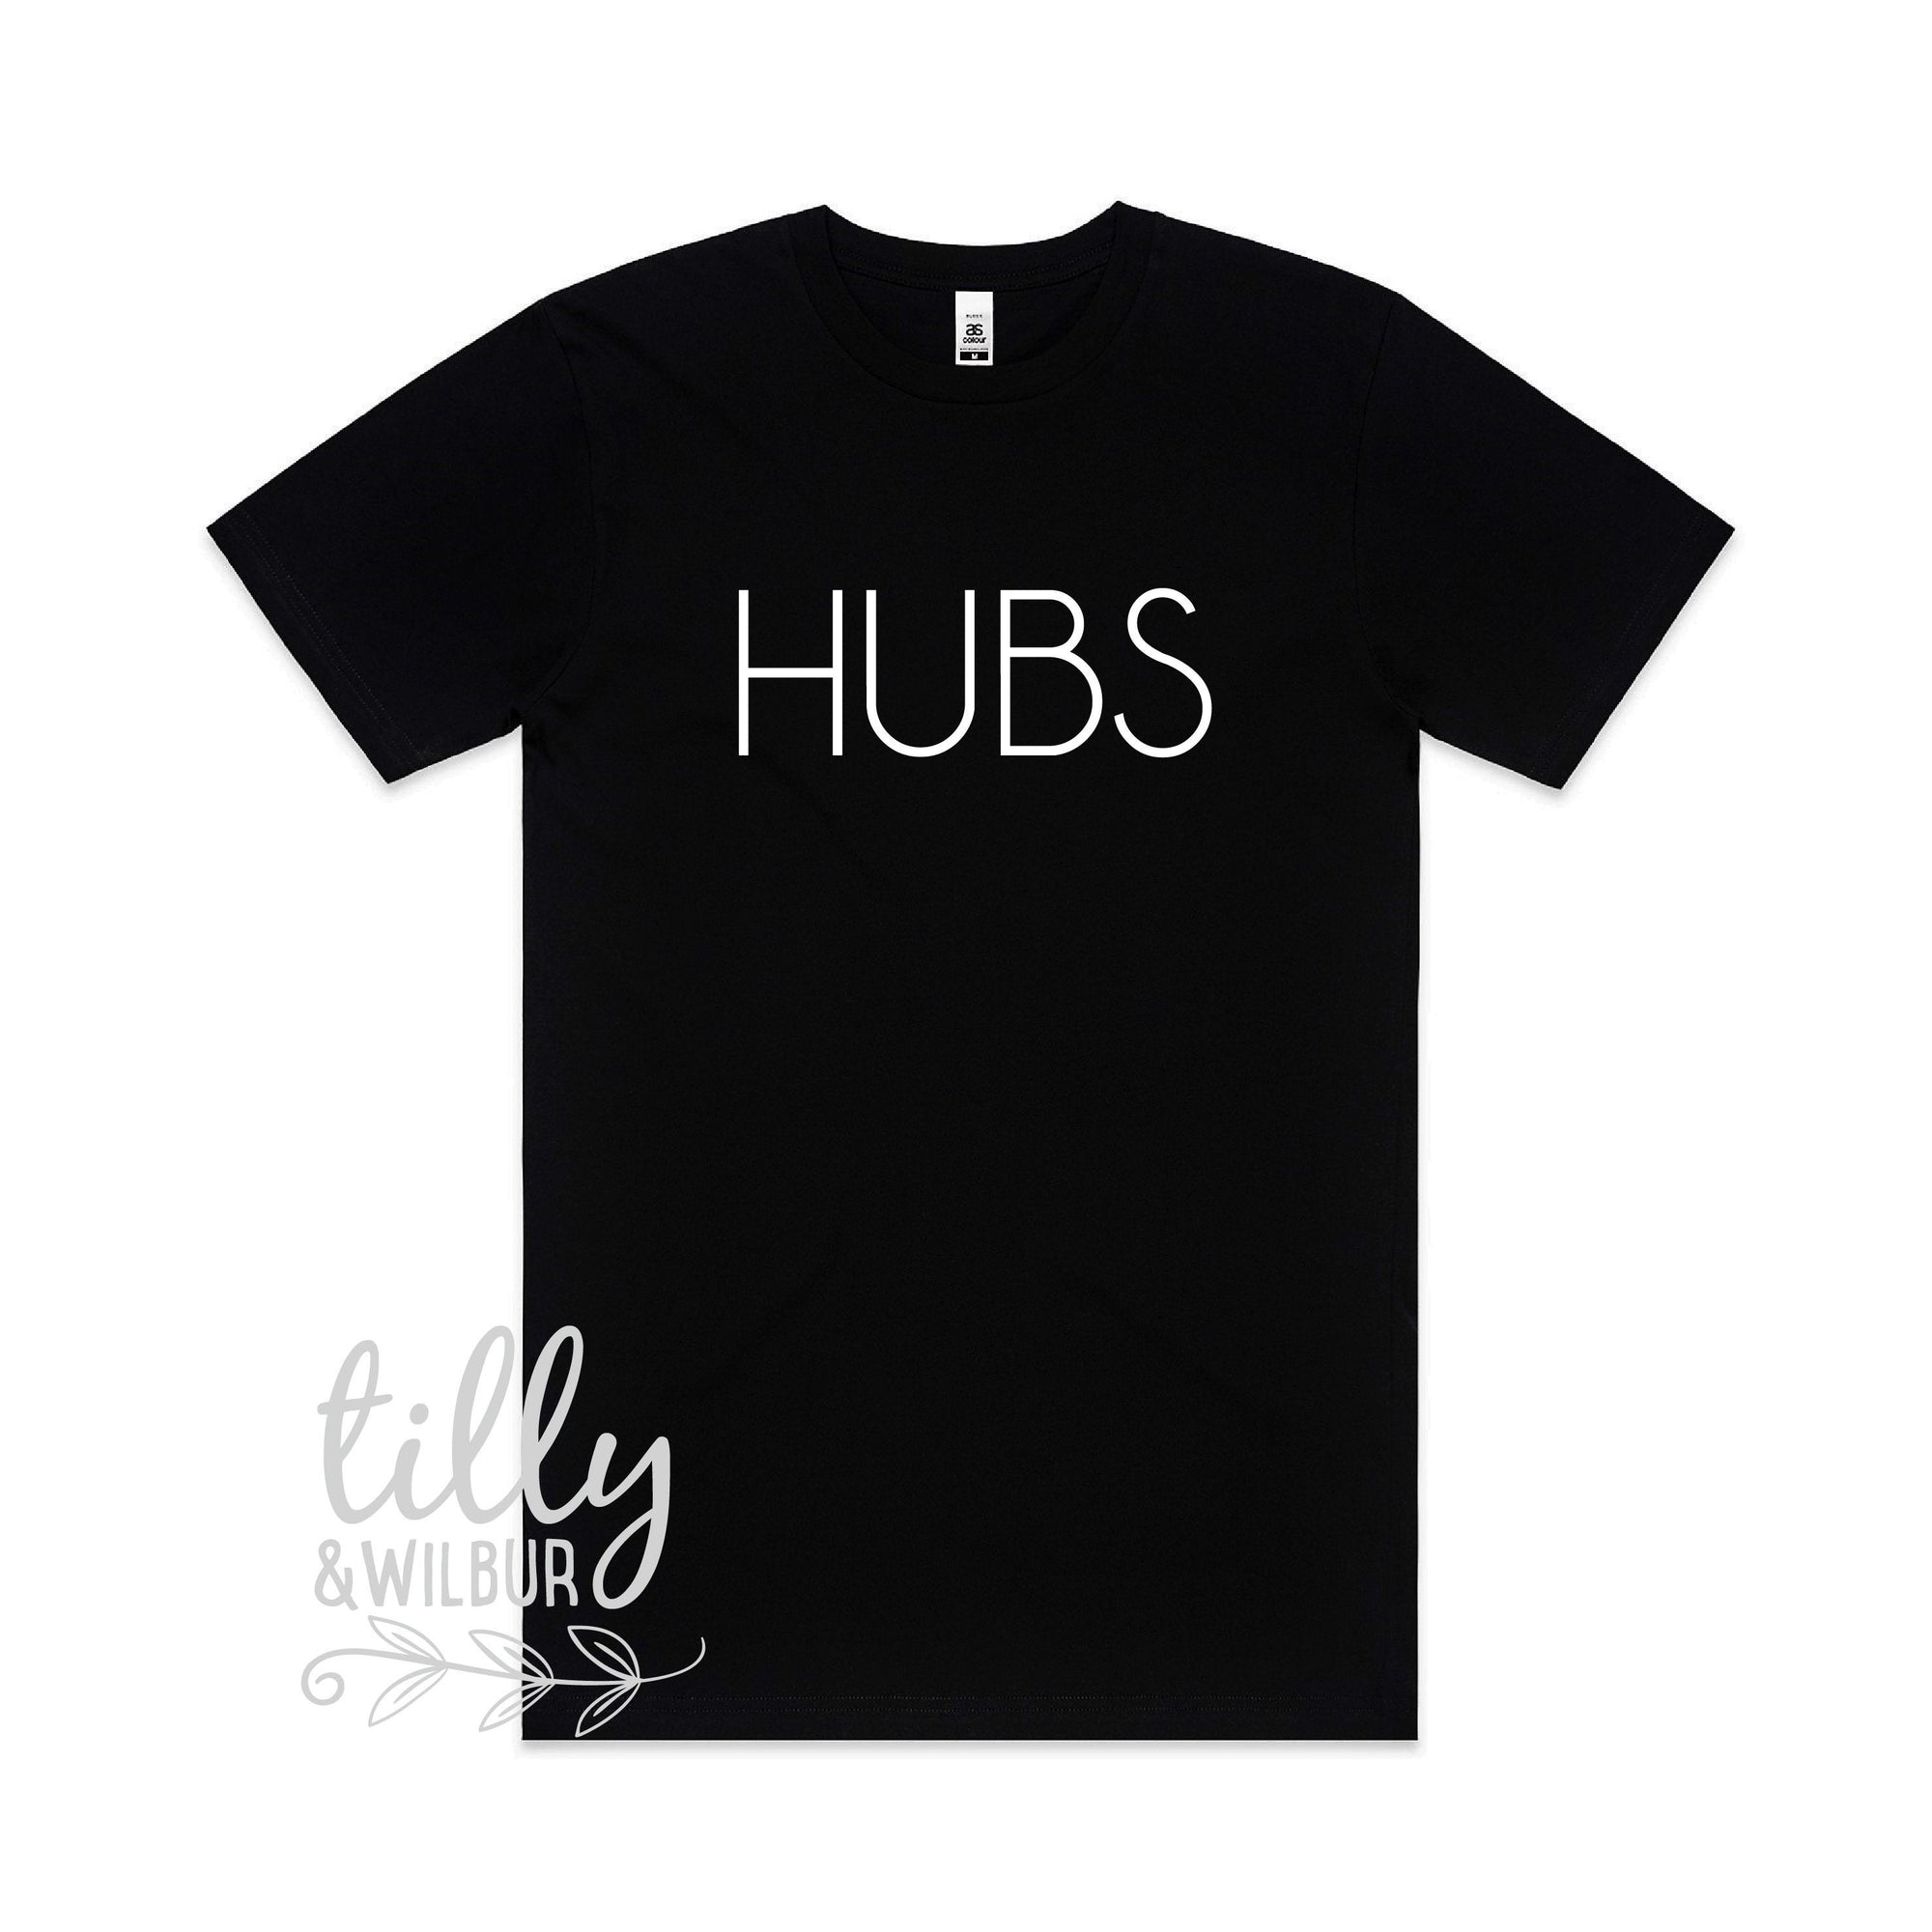 Hubs T-Shirt, Newlywed T-Shirt, Wedding T-Shirt, Groom T-Shirt, Husband, Hubby